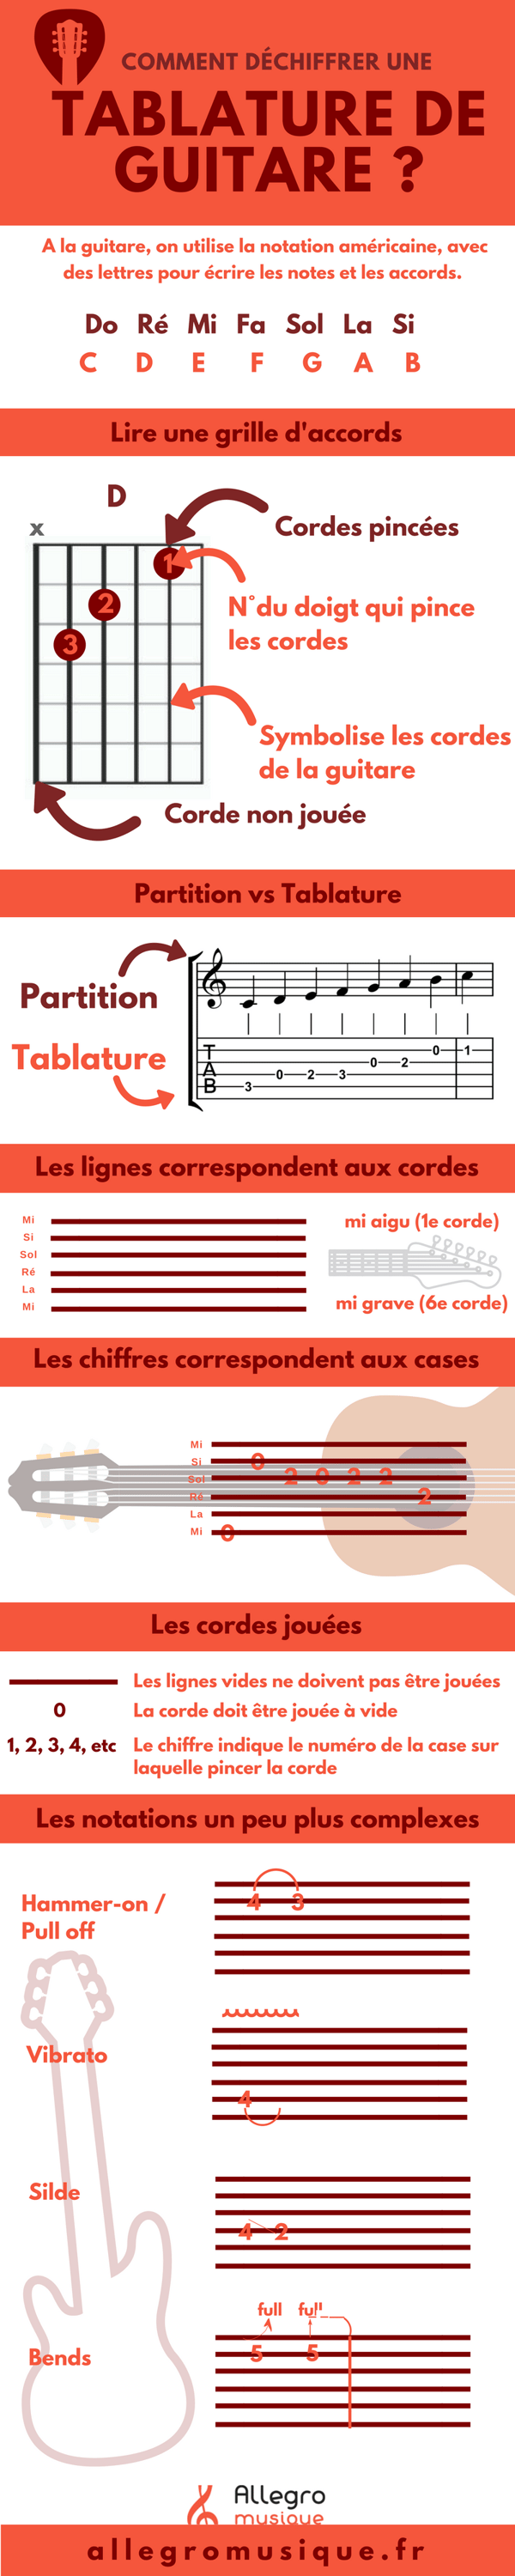 Comment Lire une Tablature Guitare ? +60 Symboles Expliqués